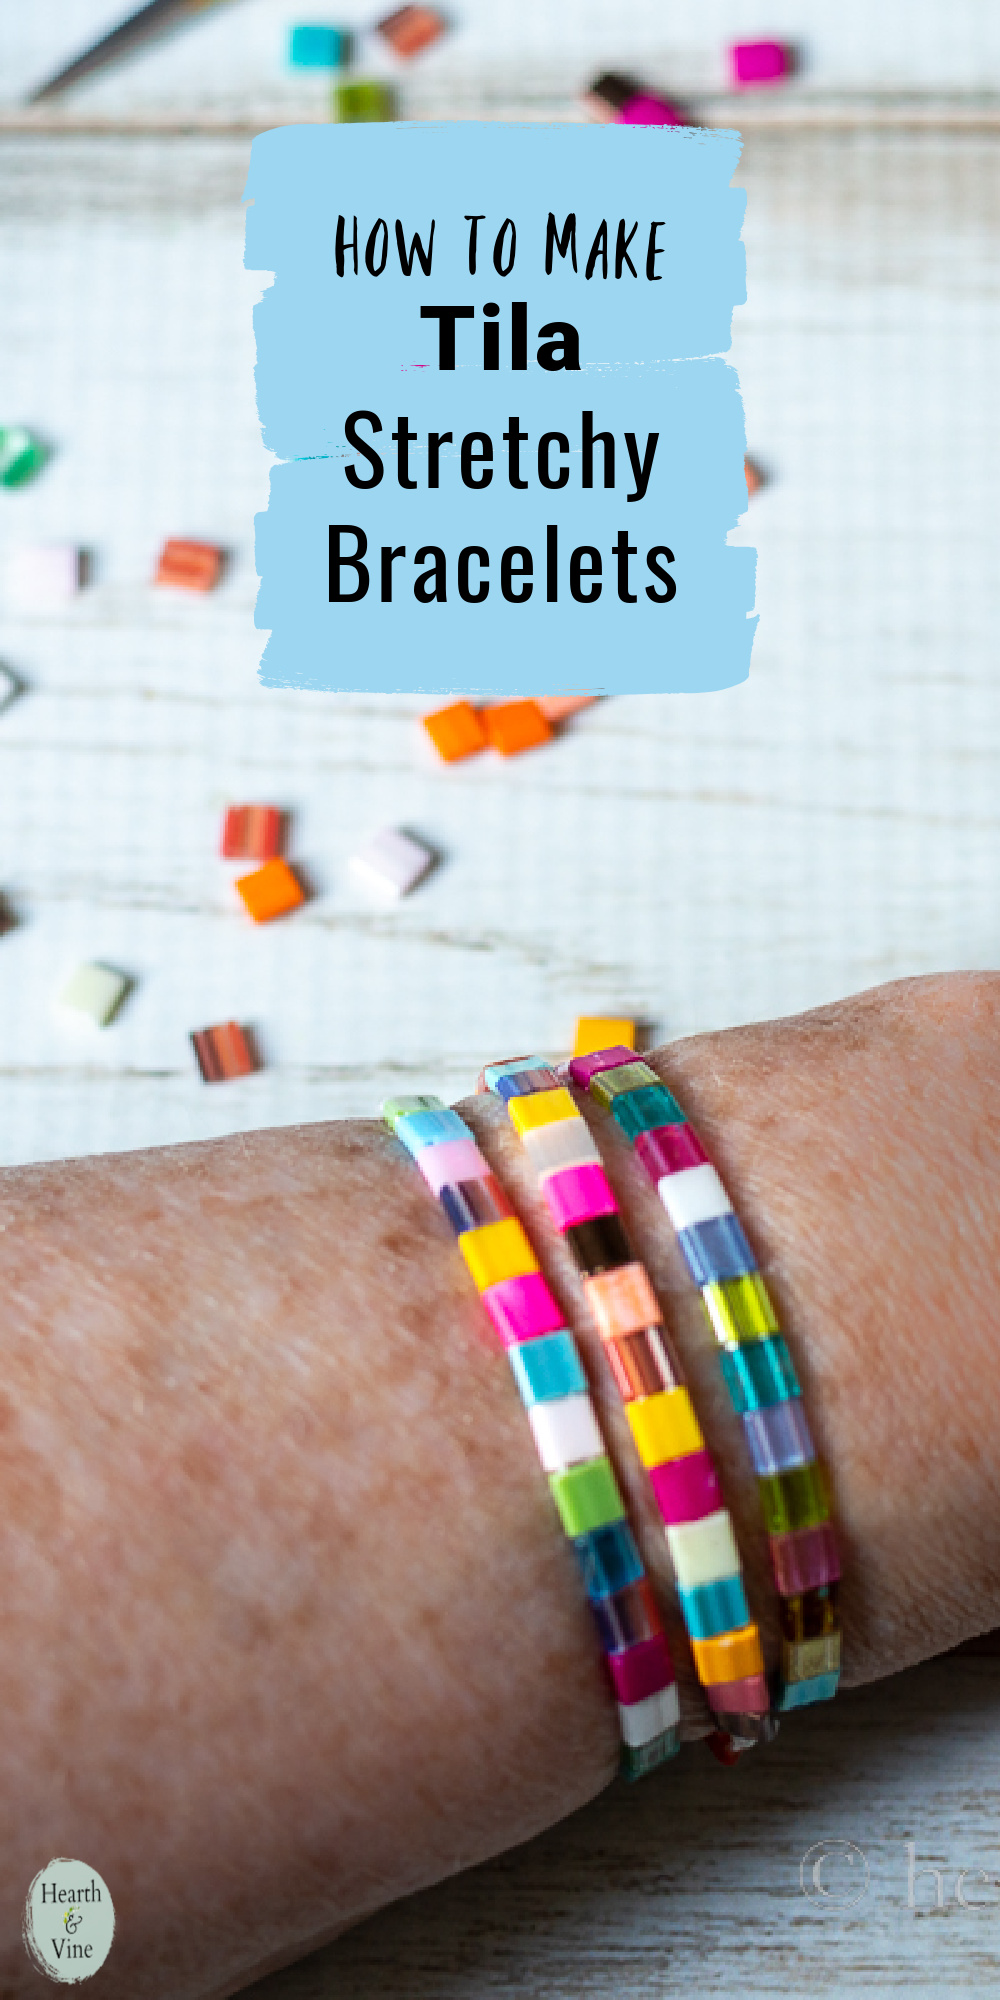 Three tila bead stretchy bracelets on a wrist next to several additional beads and a box tila beads.